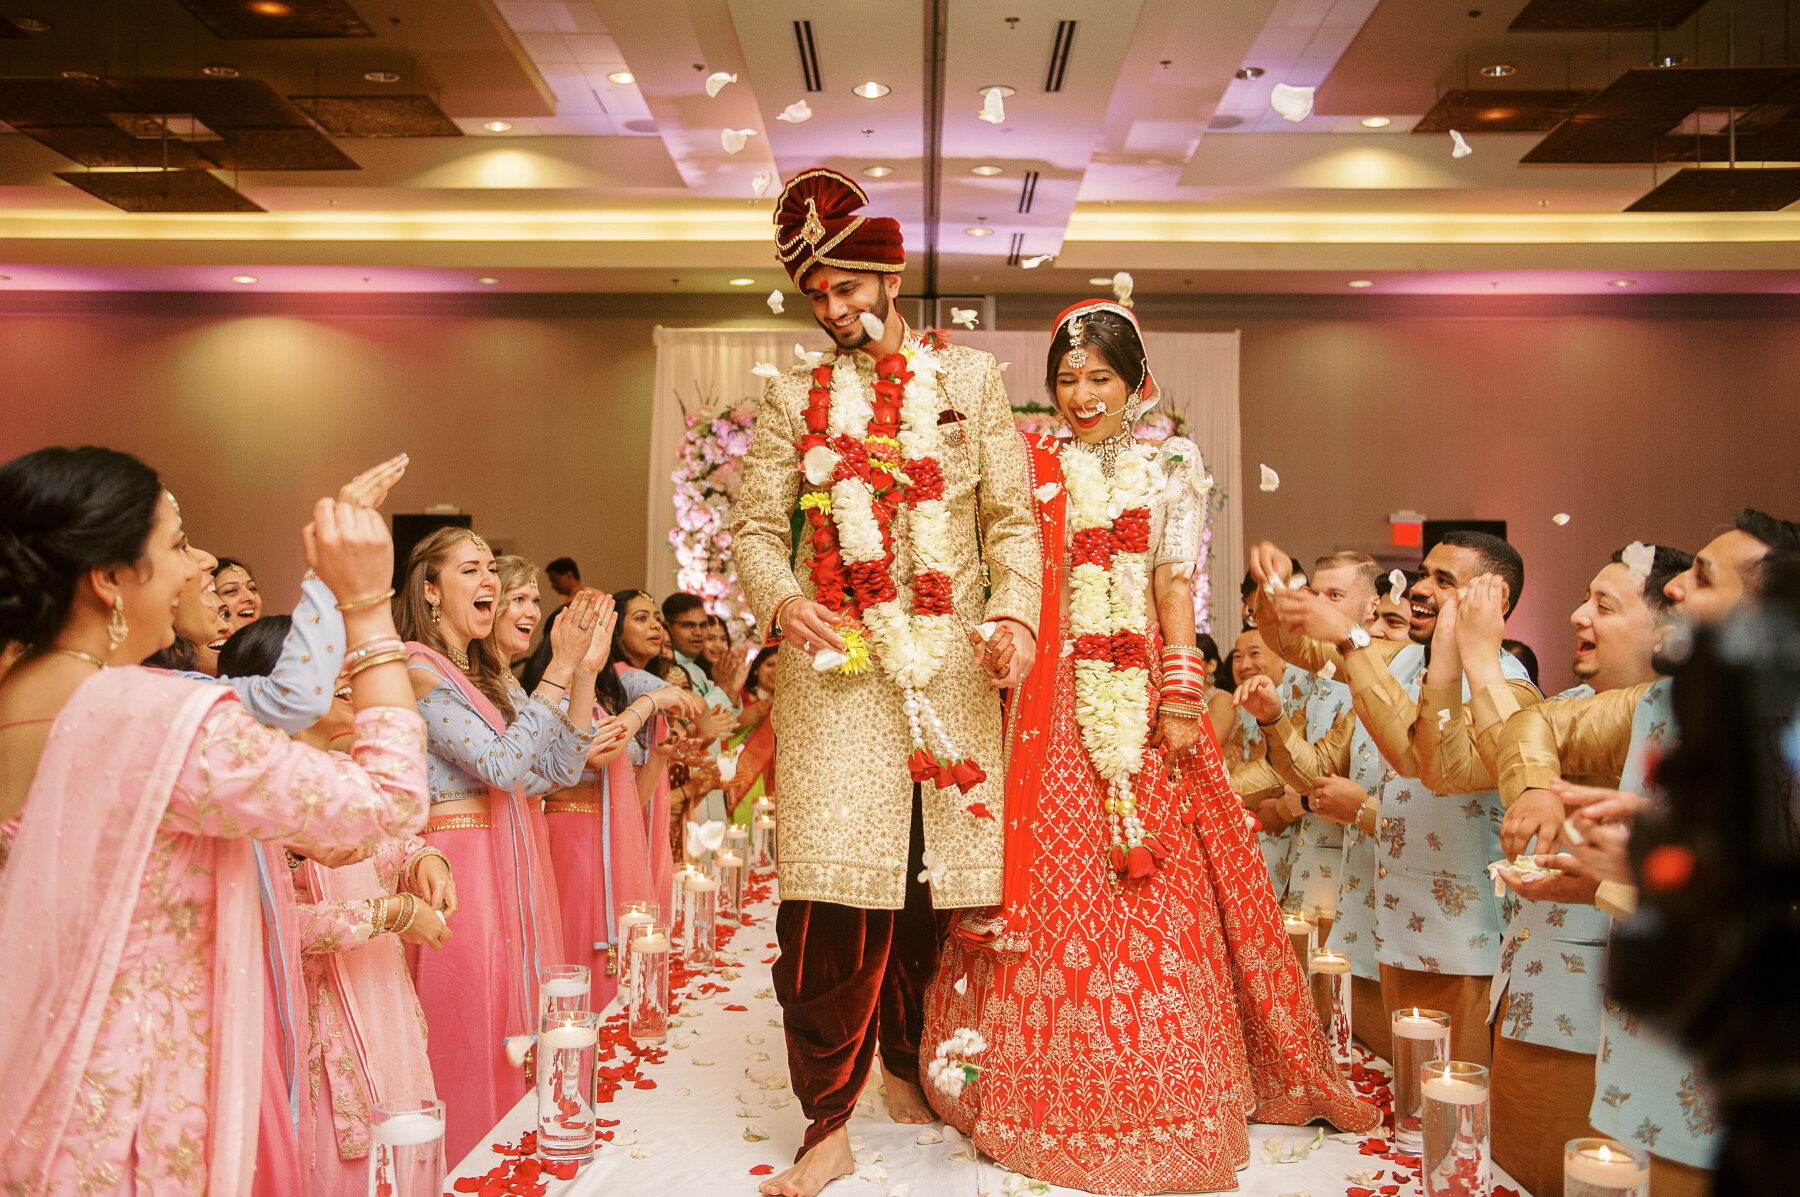 Wedding Ceremony of Ananya + Harsh Indian wedding captured by Jamie Vinson Photgraphy